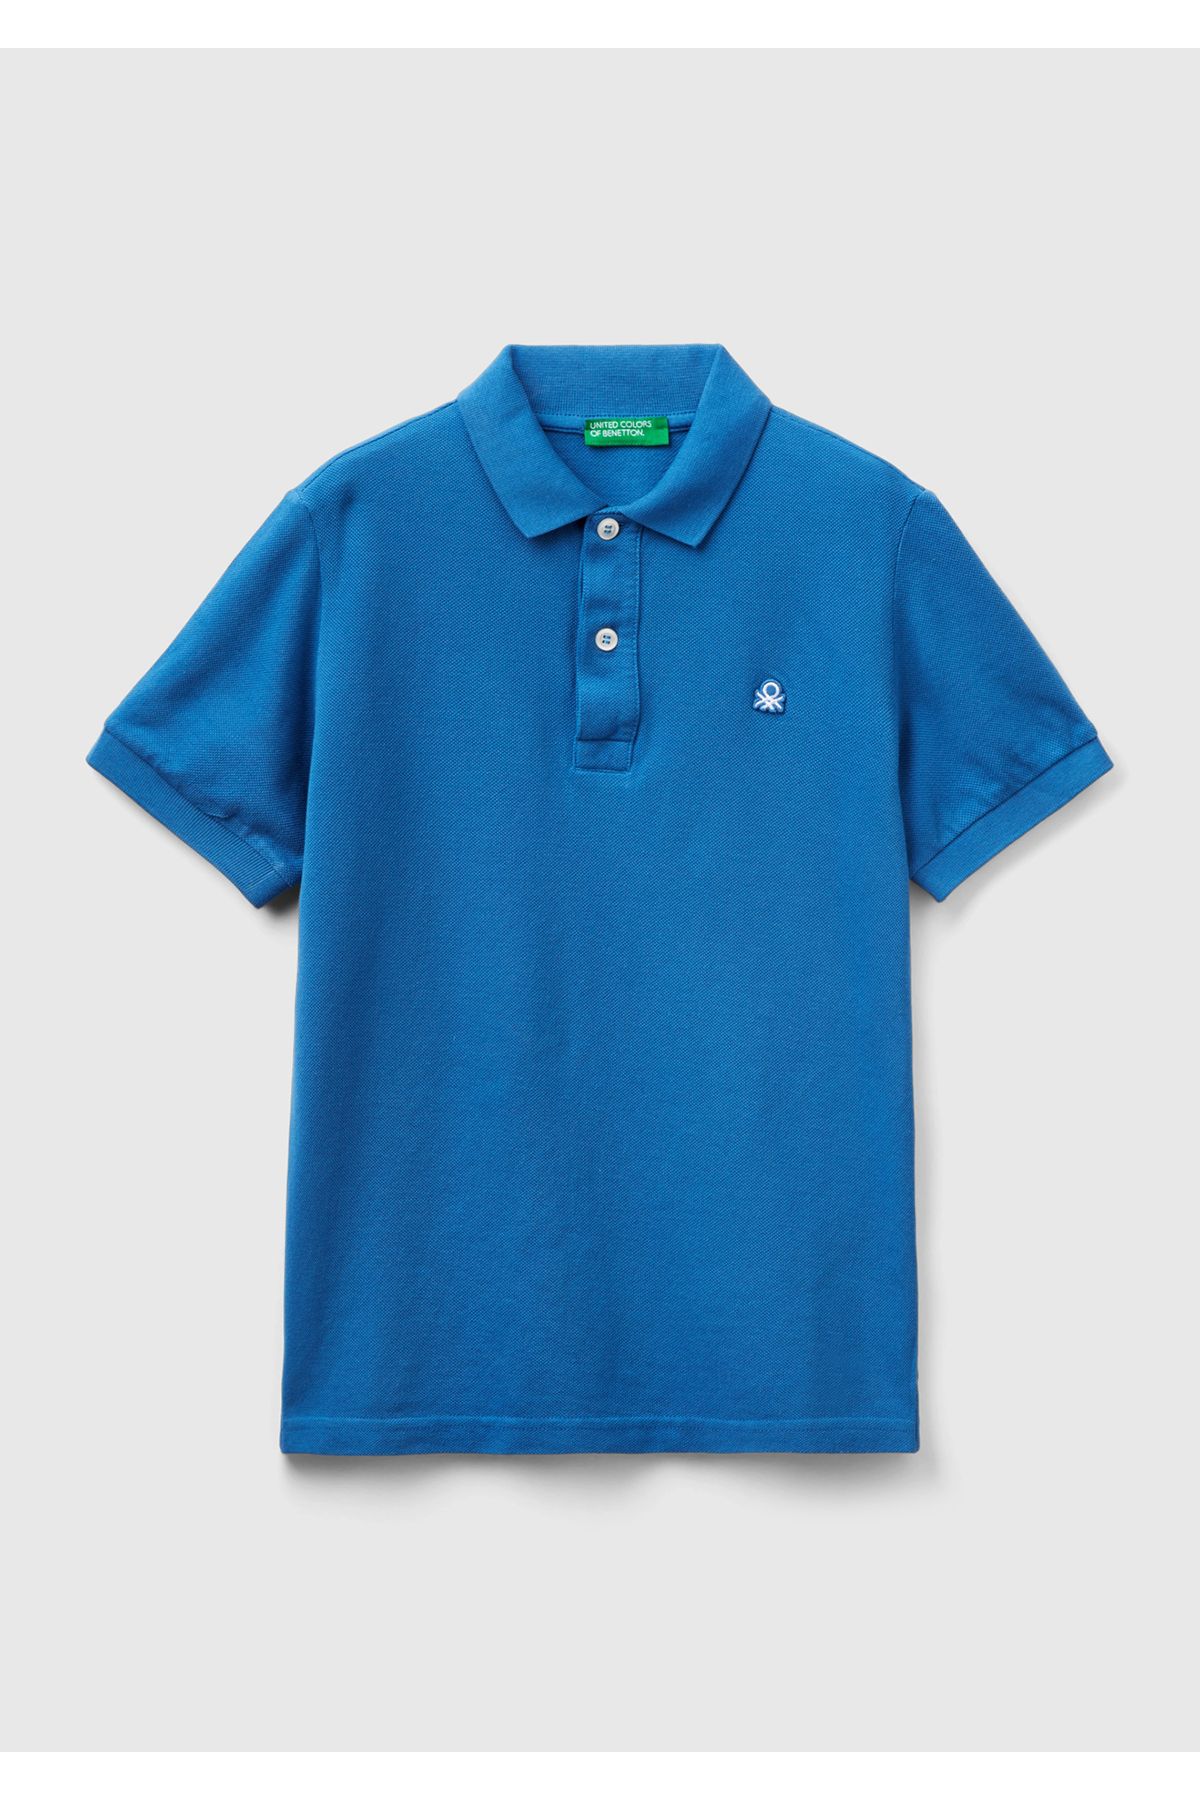 United Colors of Benetton Erkek Çocuk Saks Mavi Logolu Pike Polo T-Shirt